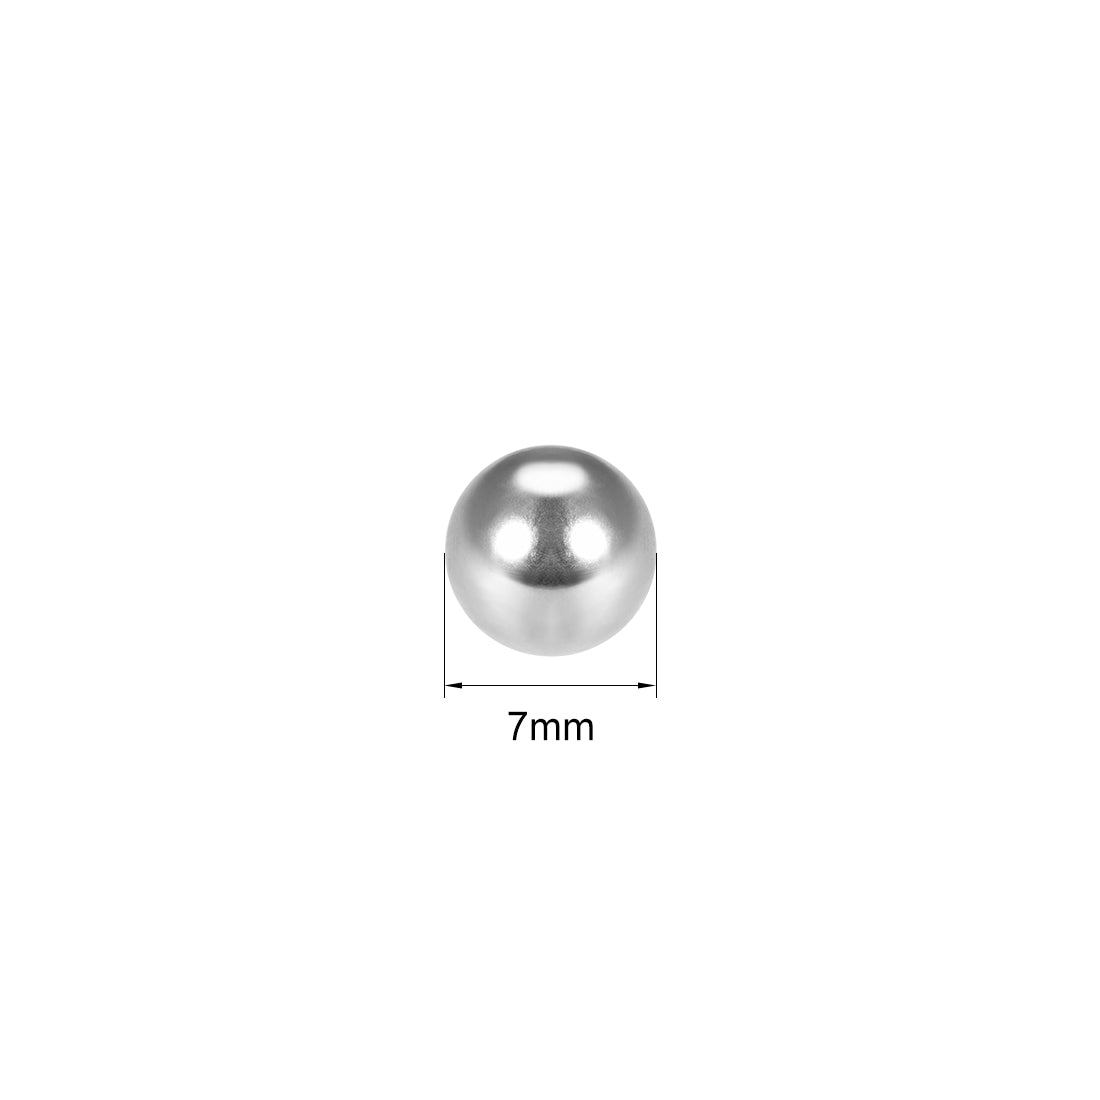 uxcell Uxcell 4.5mm Precision Chrome Steel Bearing Balls G25 100pcs